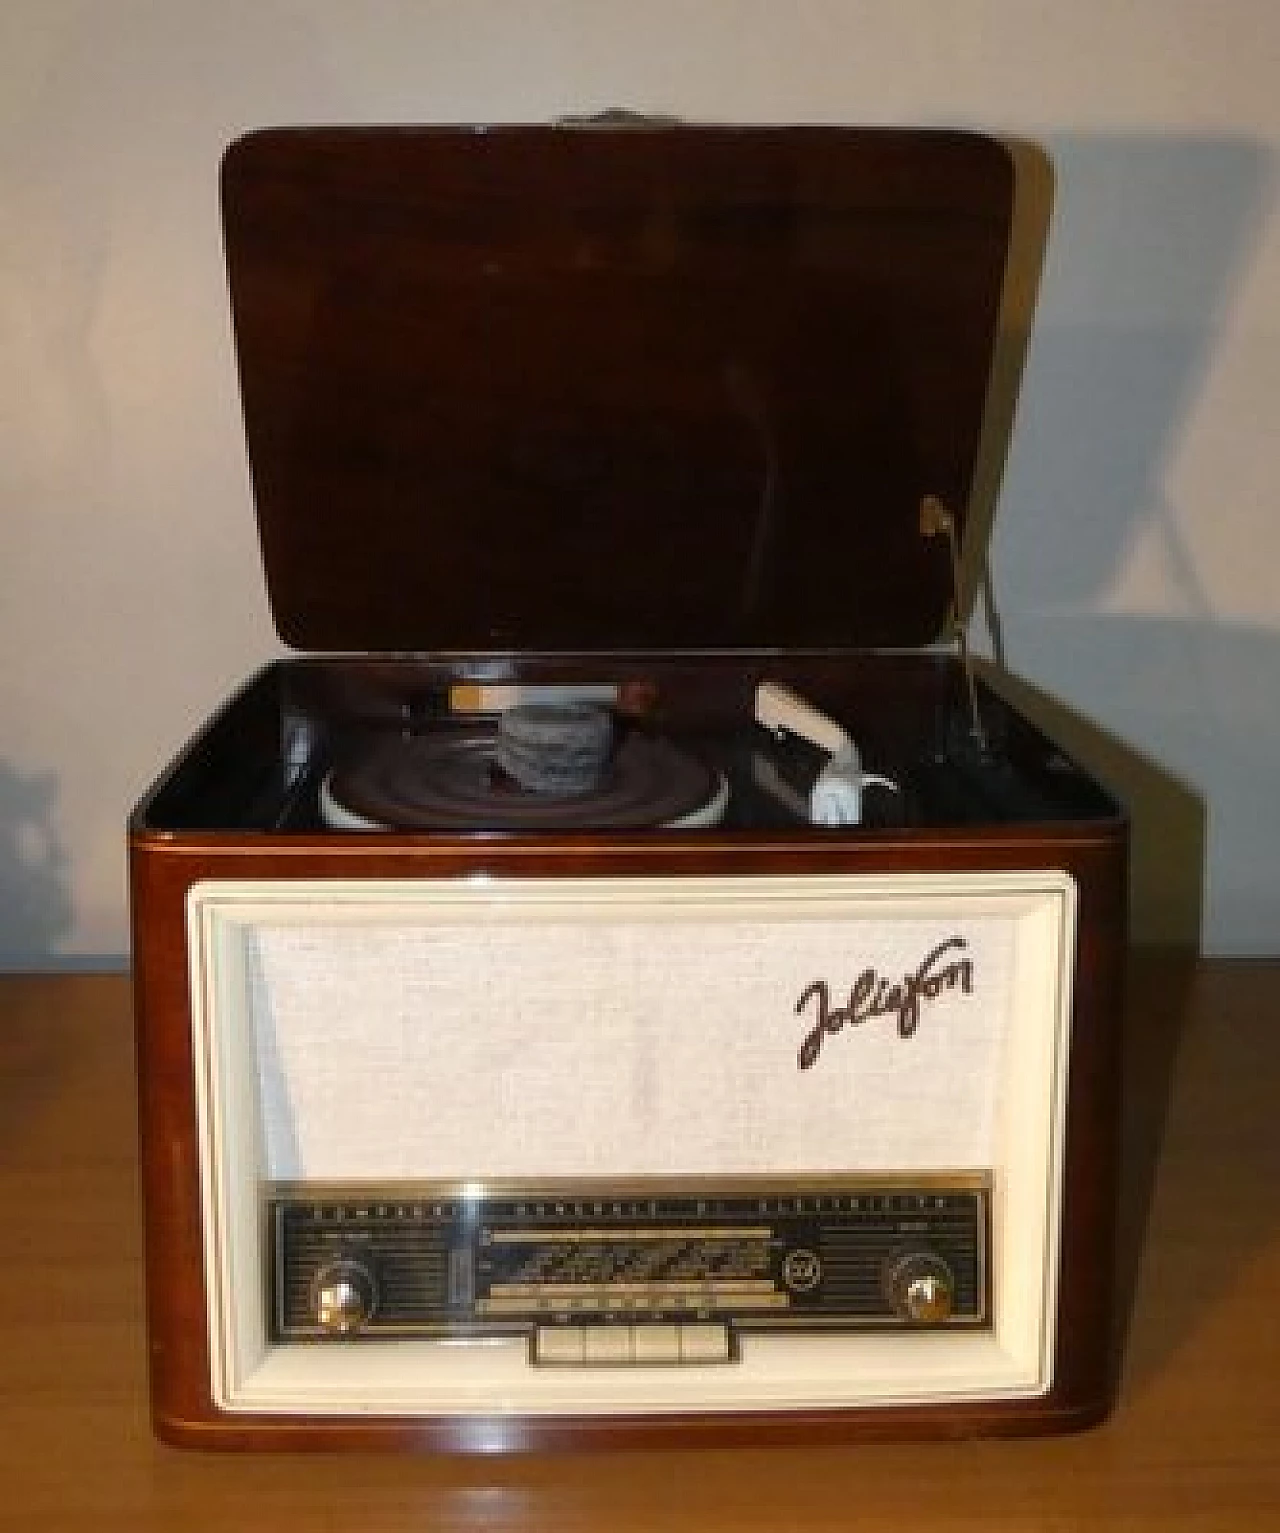 Wood Joliefon RFS 6597 turntable radio by CGE, 1950s 3